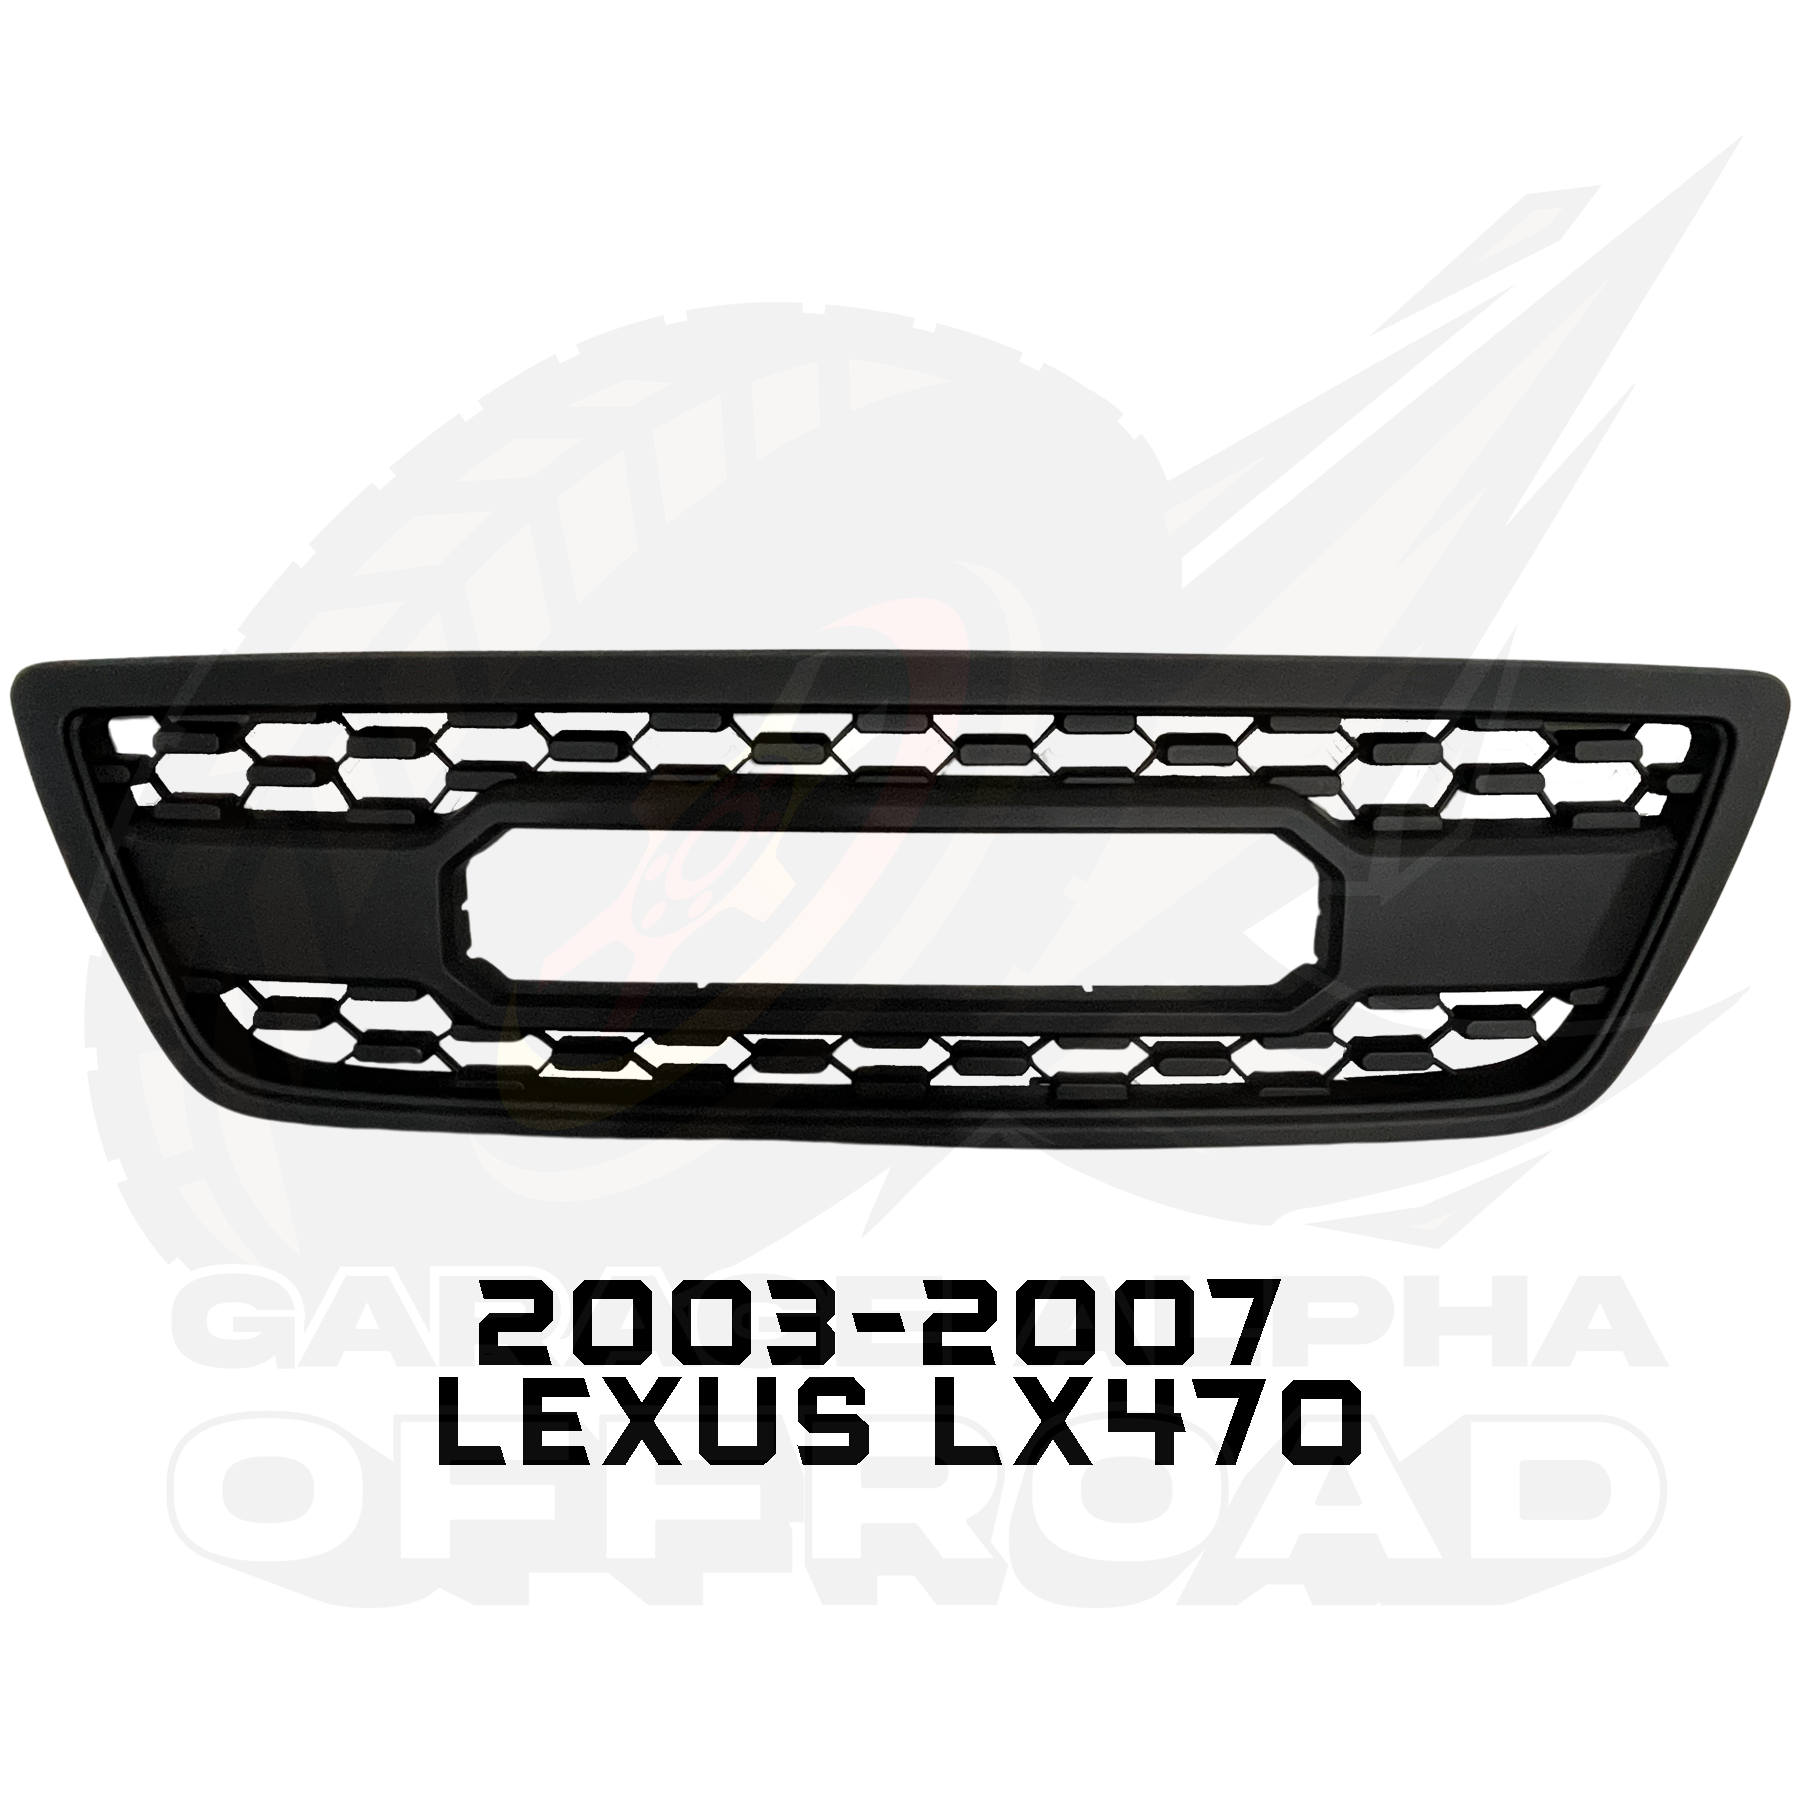 2003-2007 Lexus LX470 TRD Style Grille